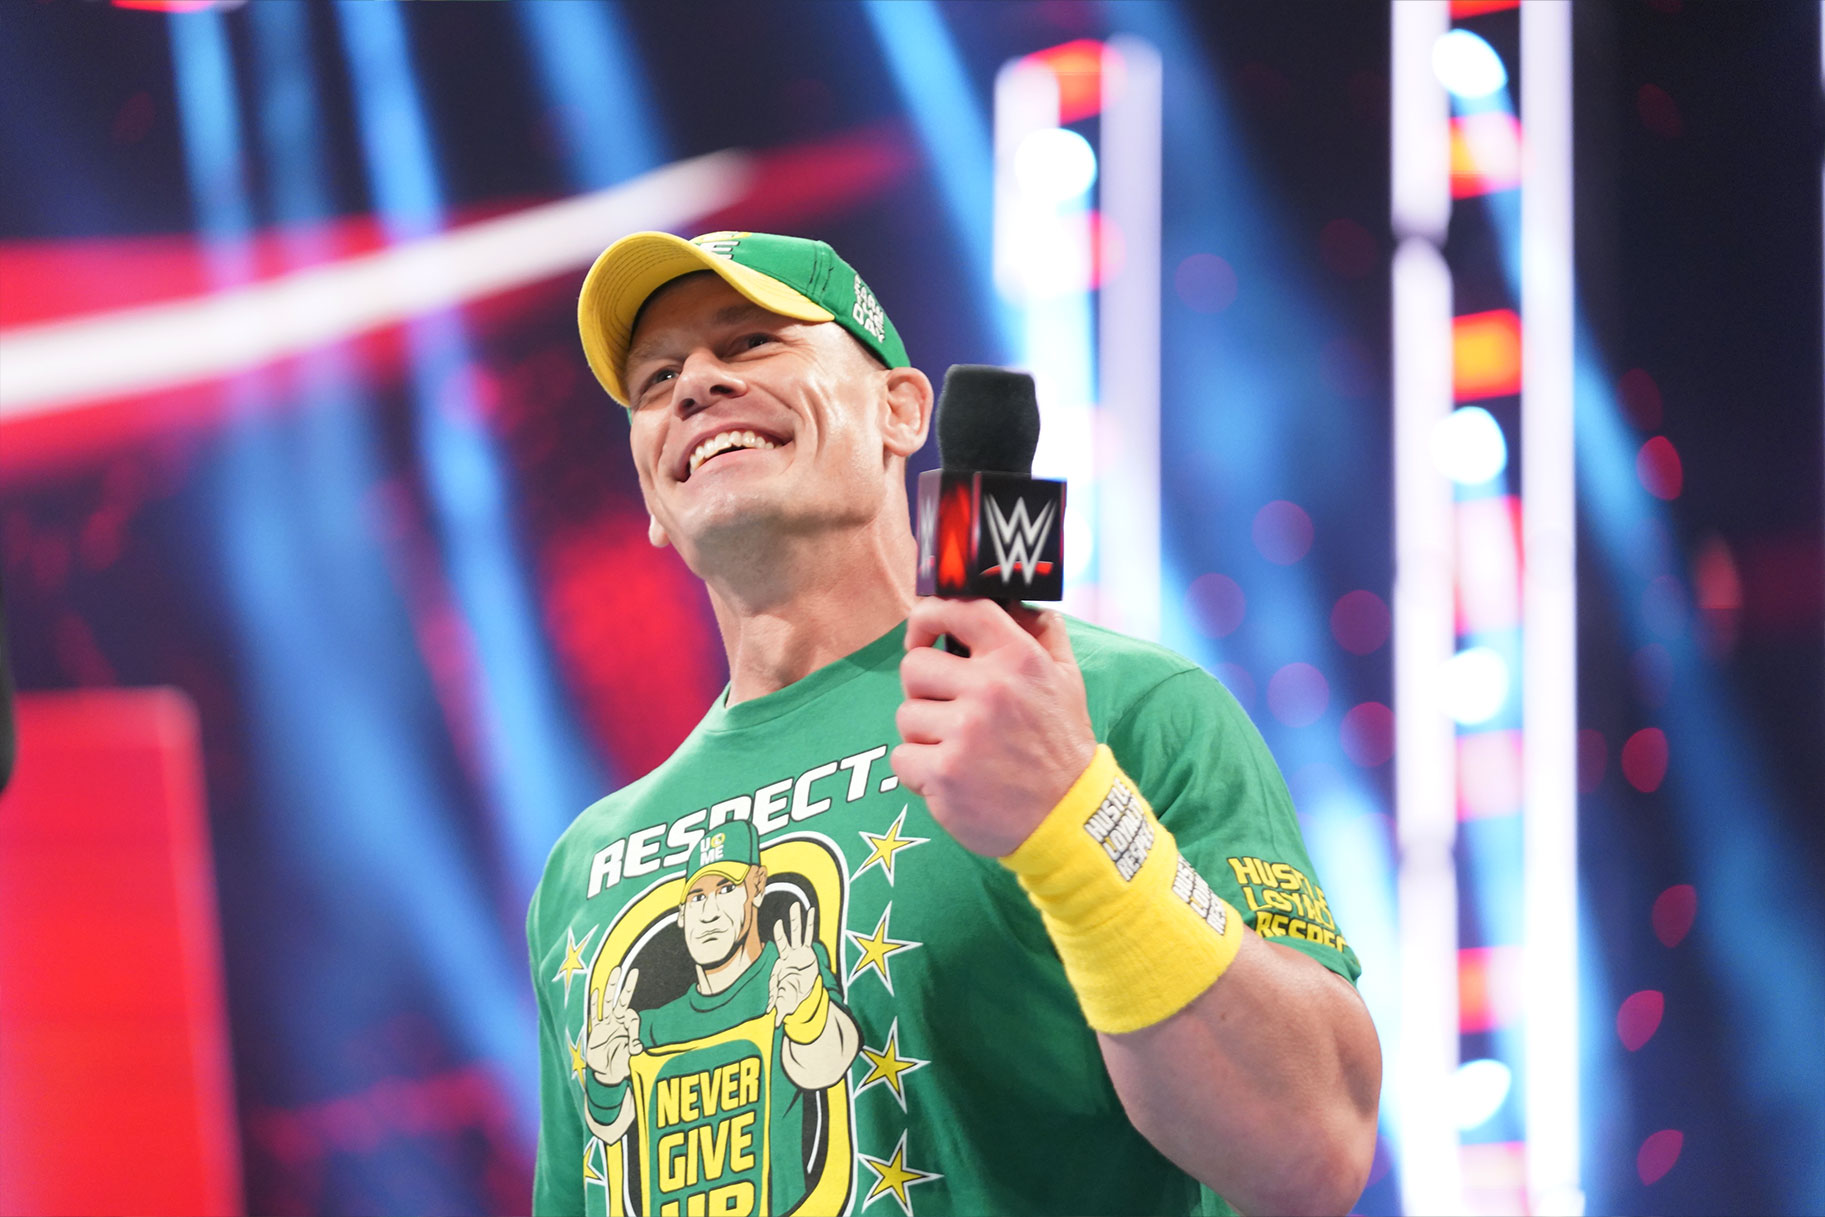 Wrestler John Cena in a green shirt and hat